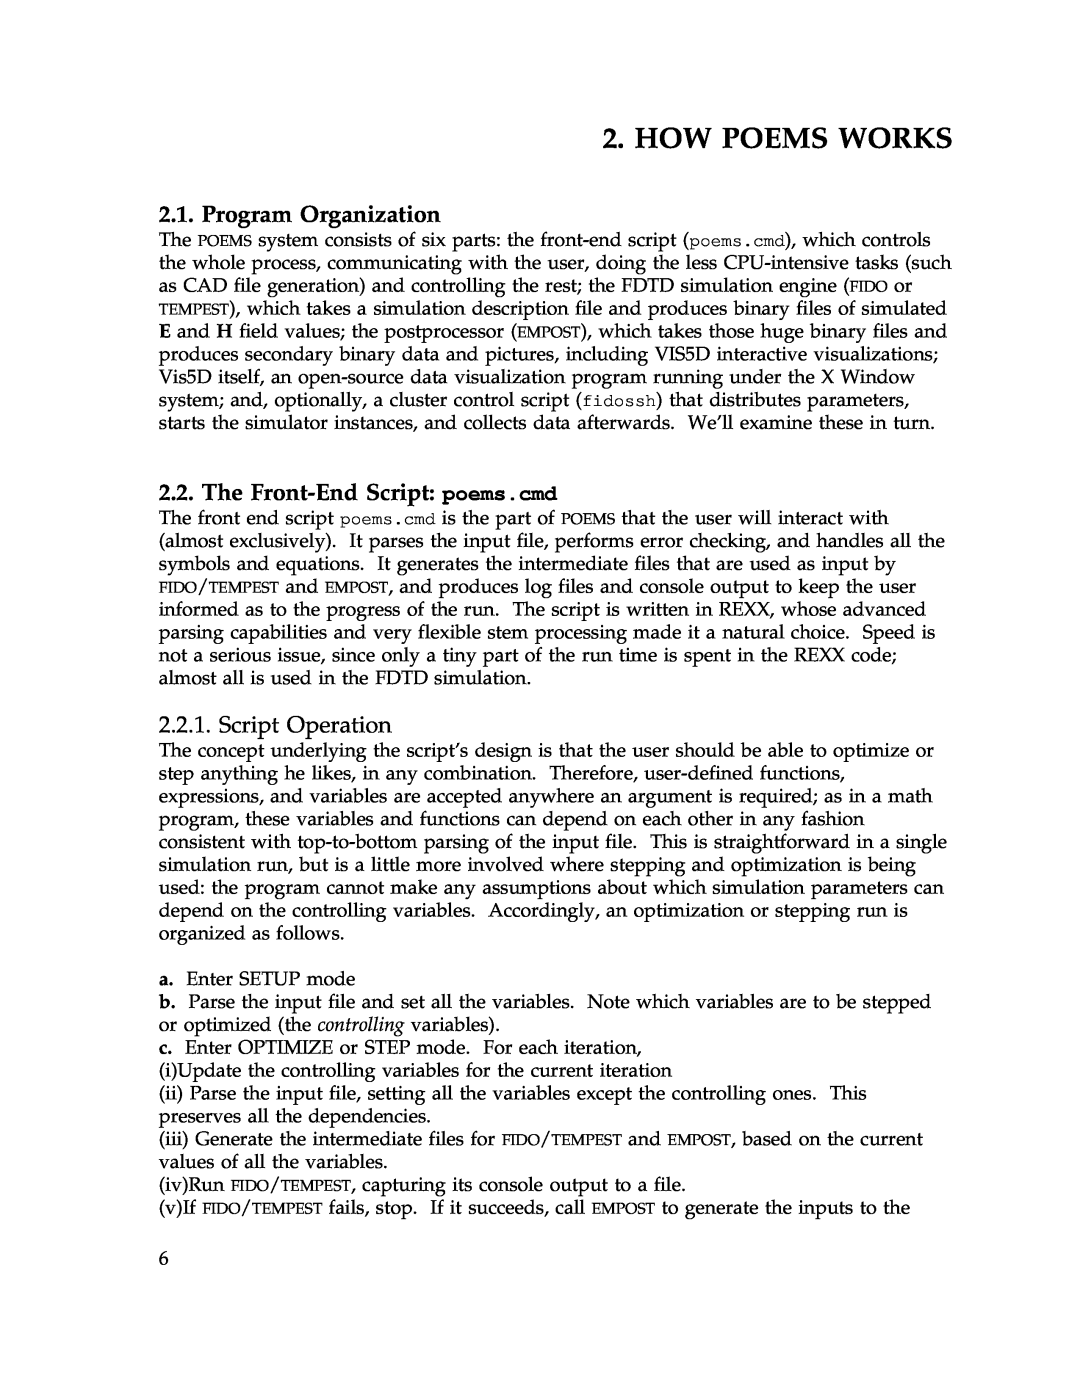 IBM Release 1.93 manual How Poems Works, Program Organization, The Front-End Script poems.cmd, Script Operation 